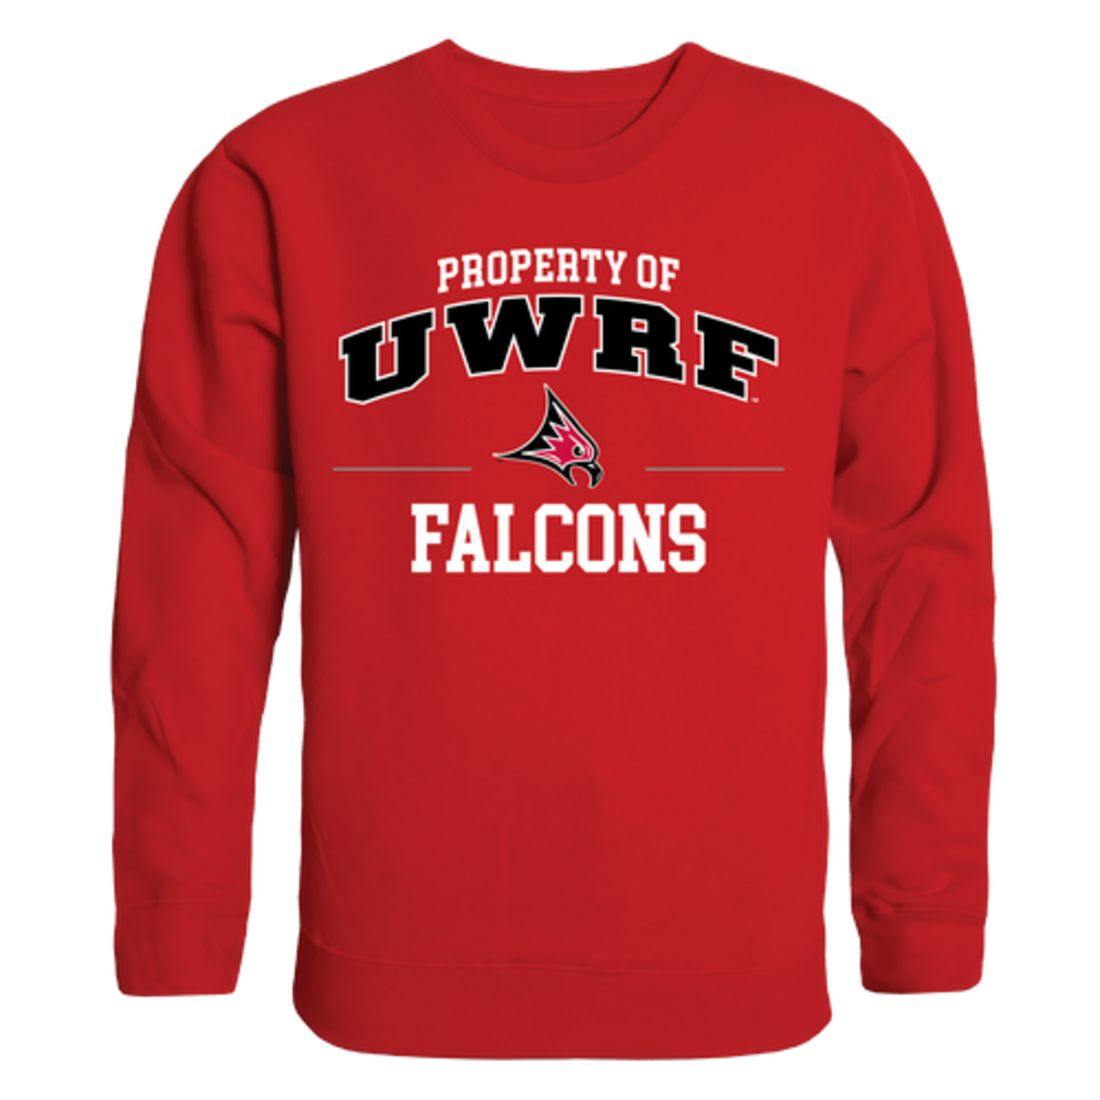 UWRF University of Wisconsin River Falls Falcons Property Crewneck Pullover Sweatshirt Sweater Red-Campus-Wardrobe